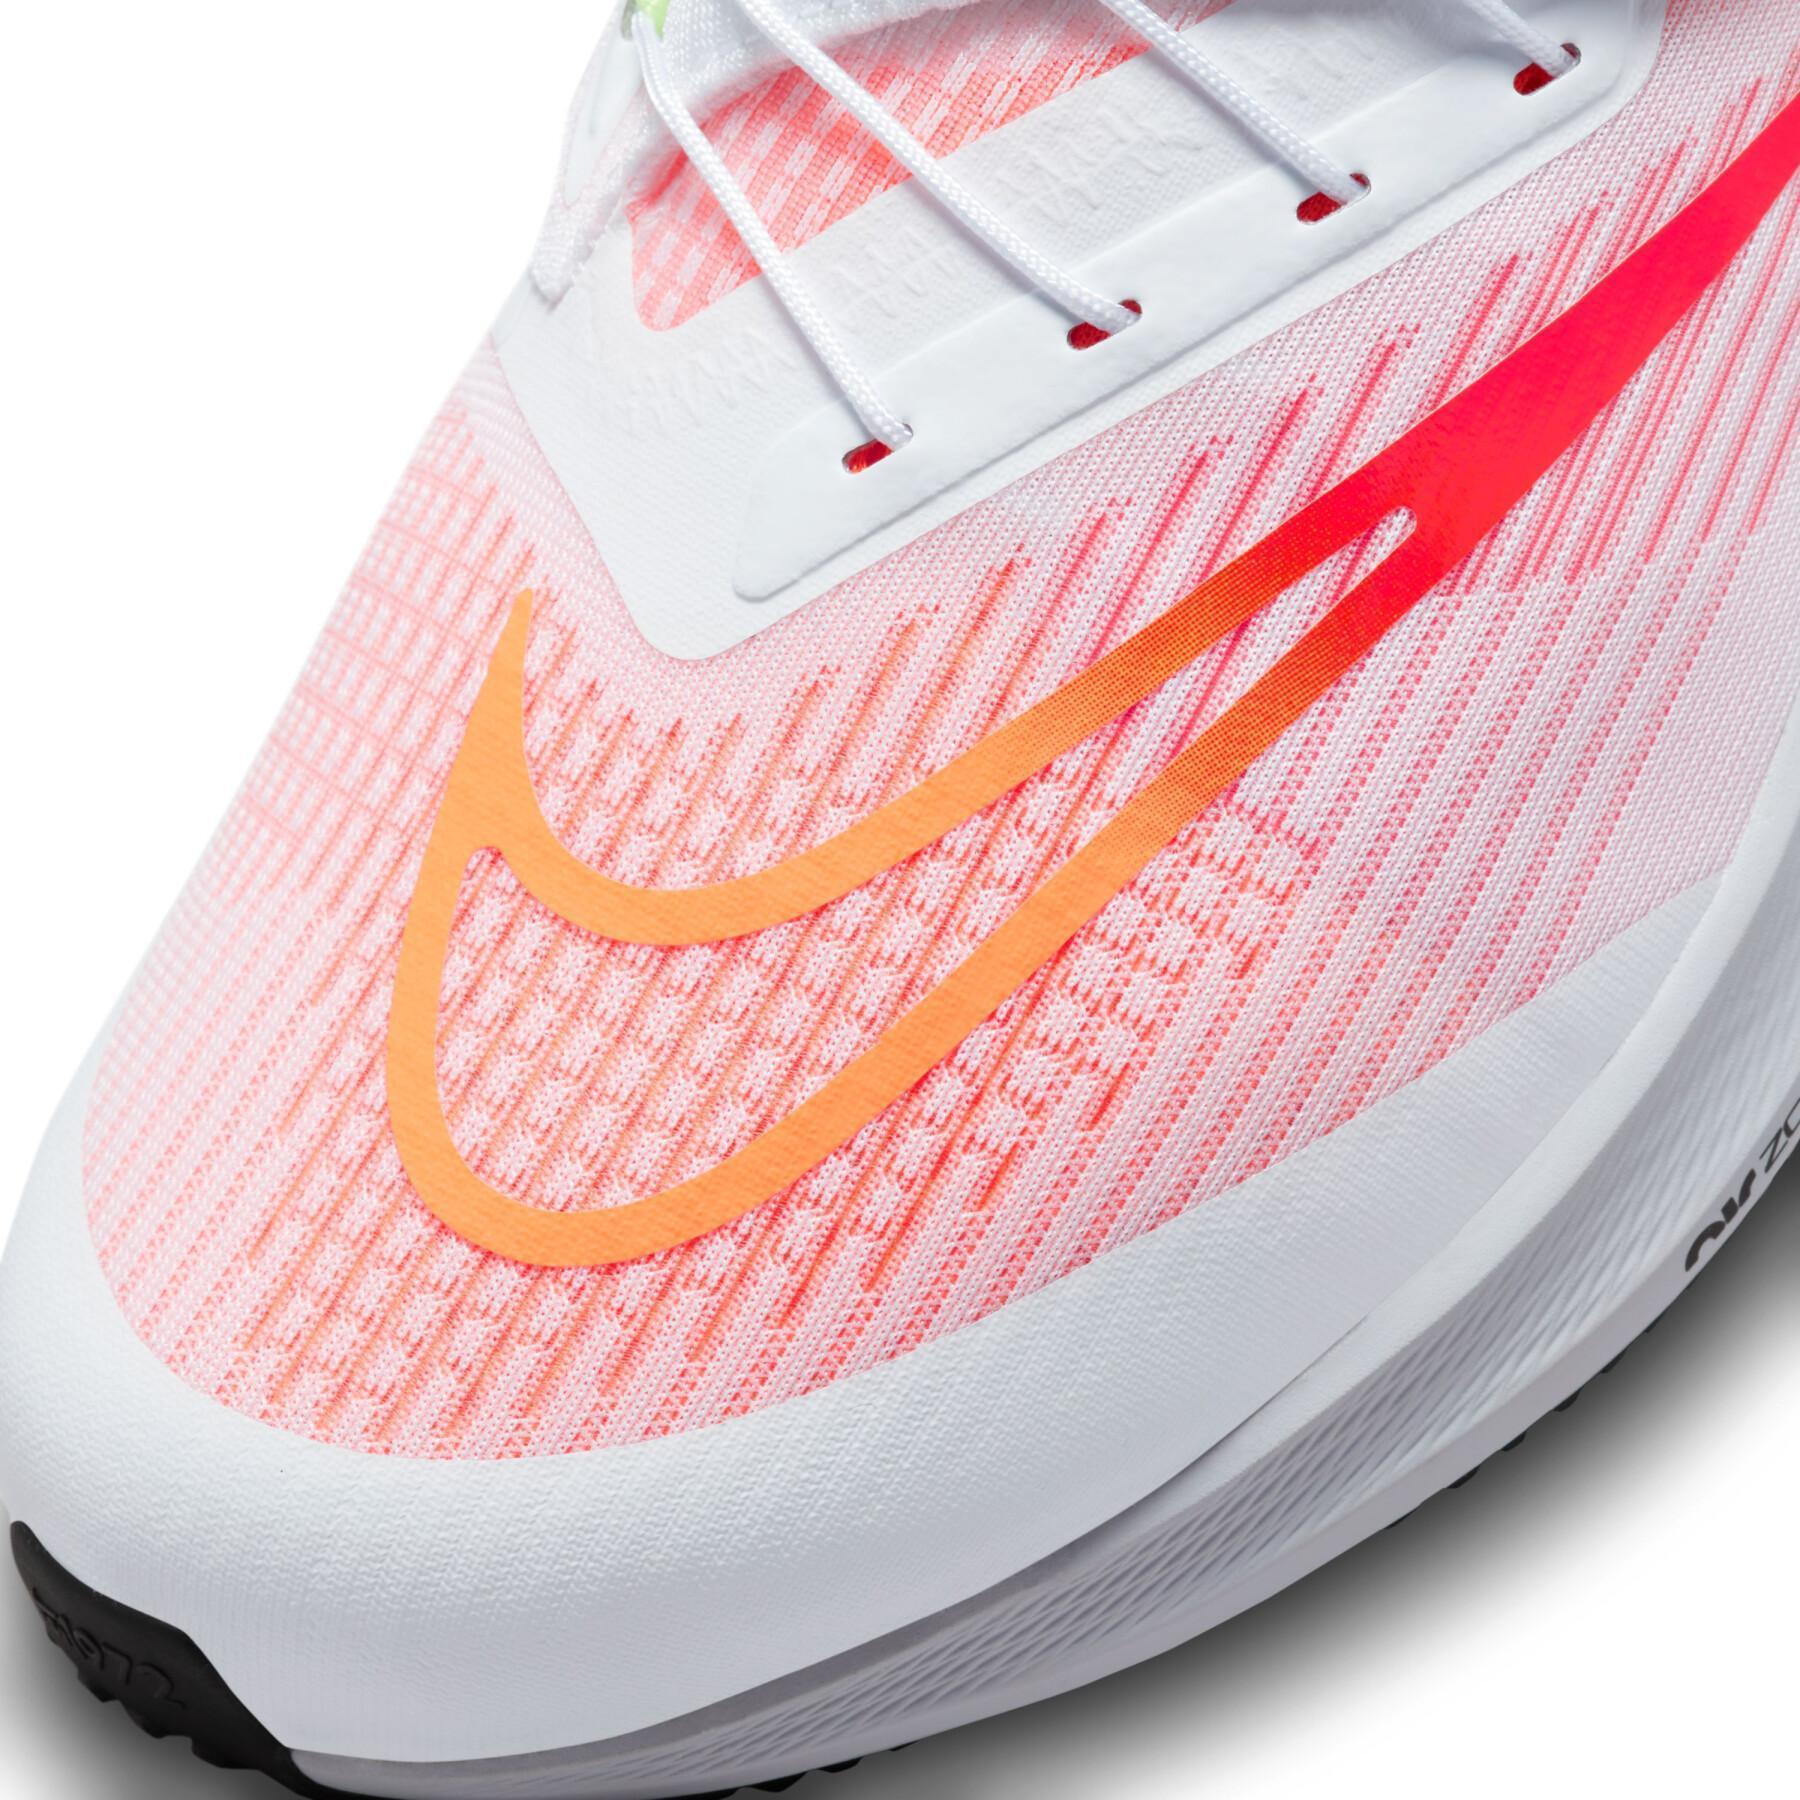 Running shoes Nike Air Zoom Pegasus 39 FlyEase